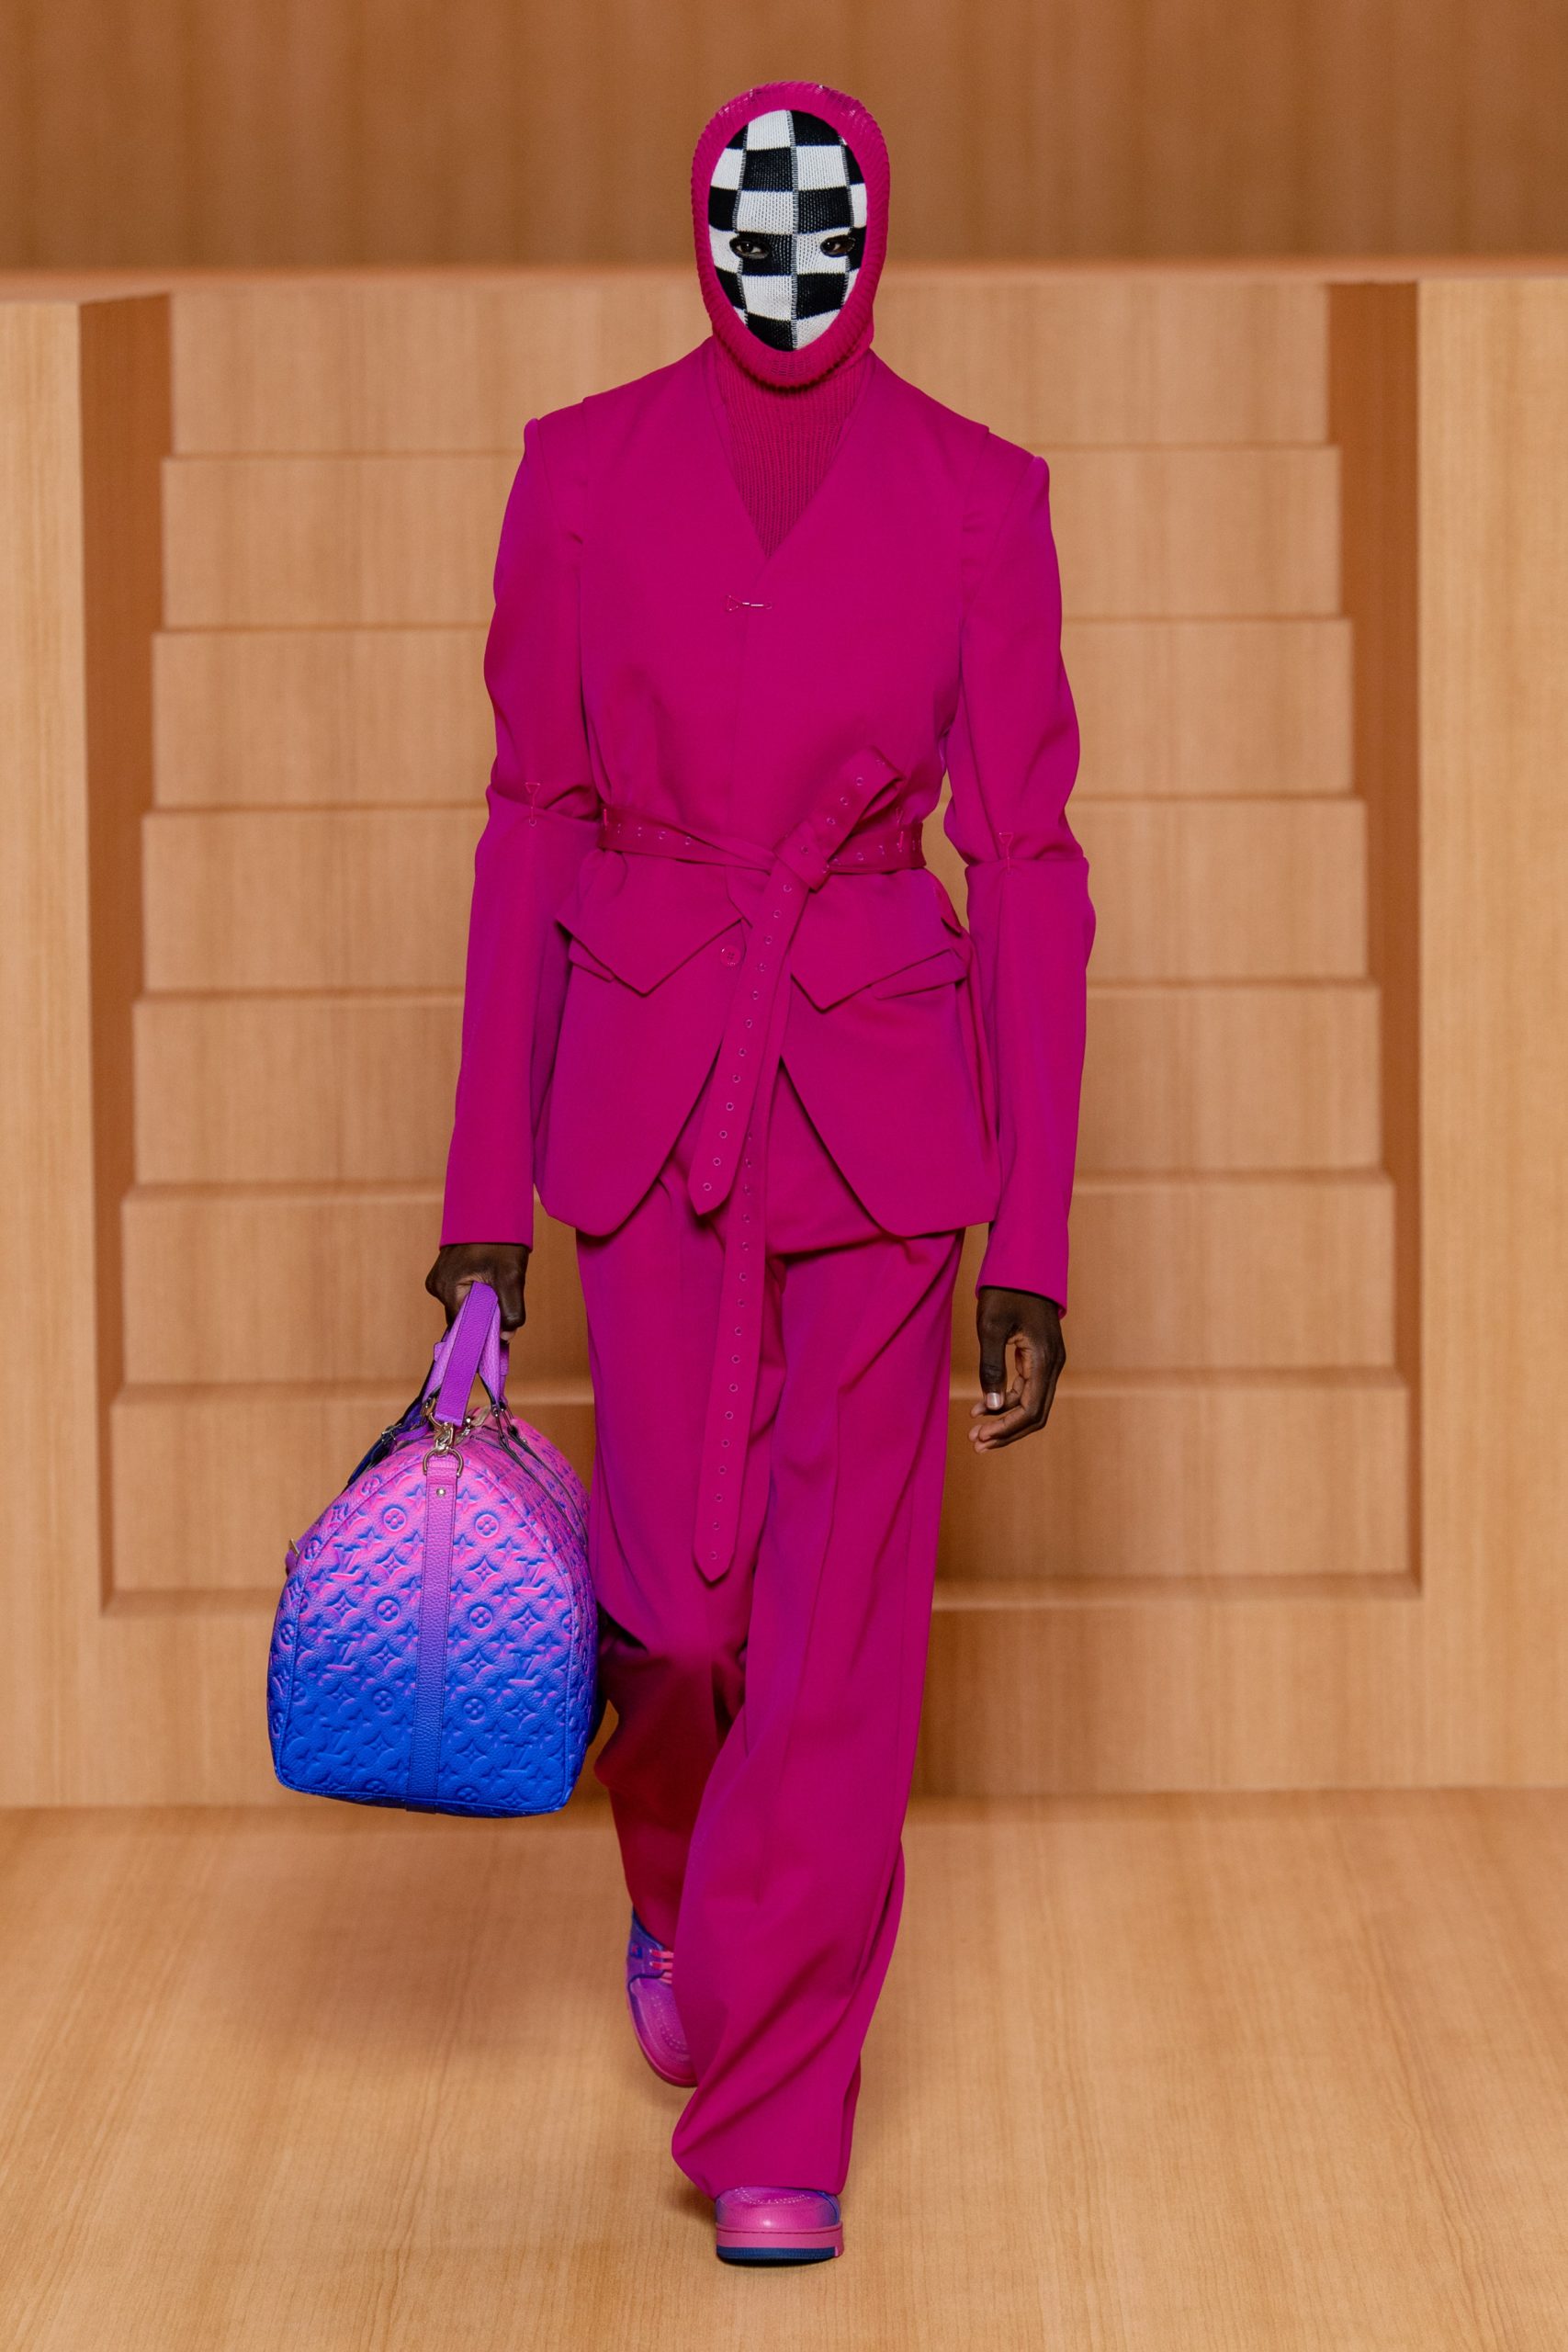 Louis Vuitton wants men to wear Jaipur pink